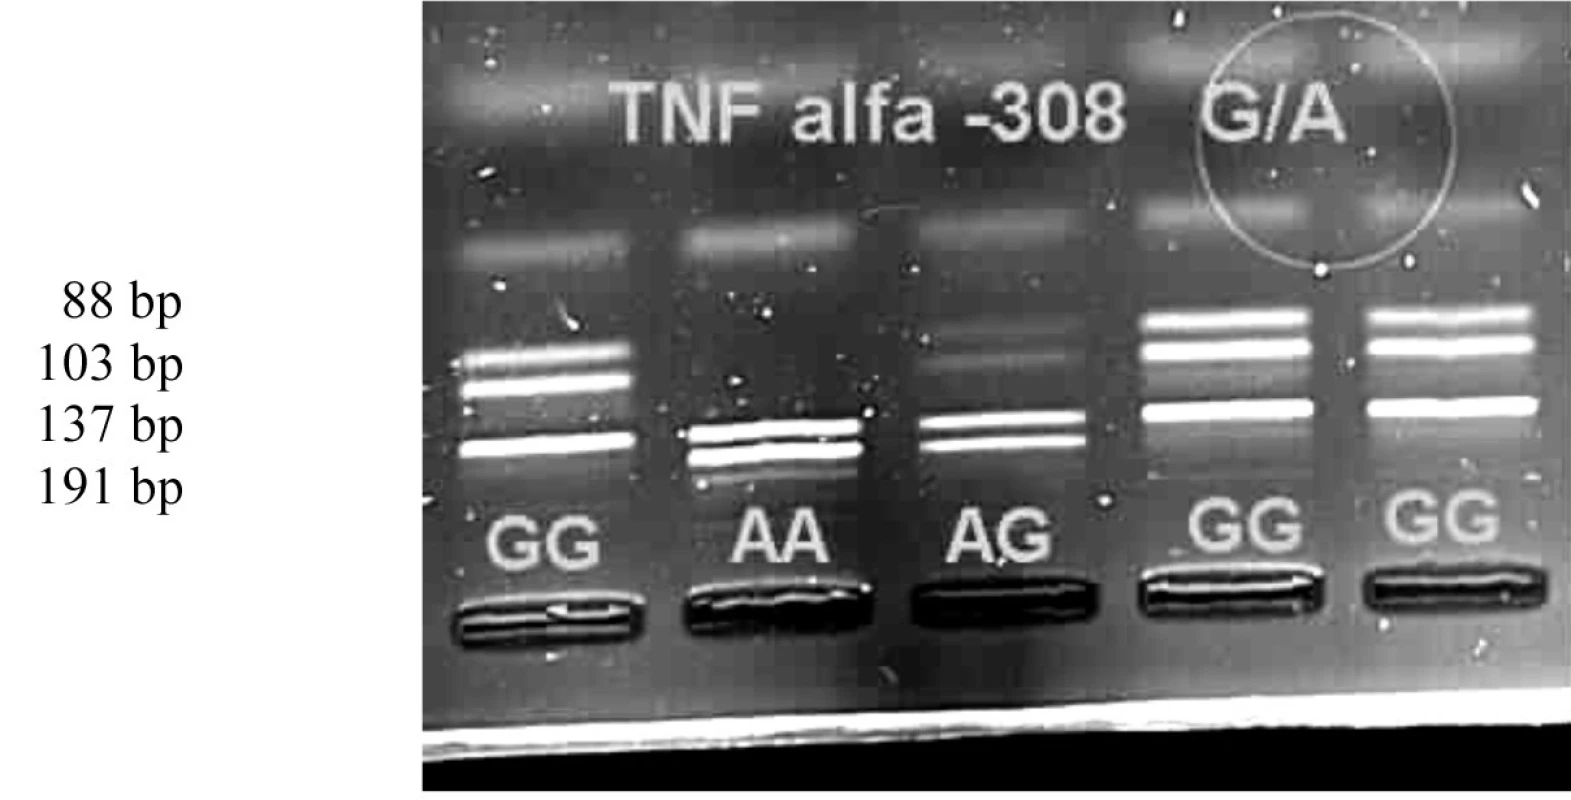 Genotypy polymorfismu -308 G/A na elektroforetickém gelu v UV světle.